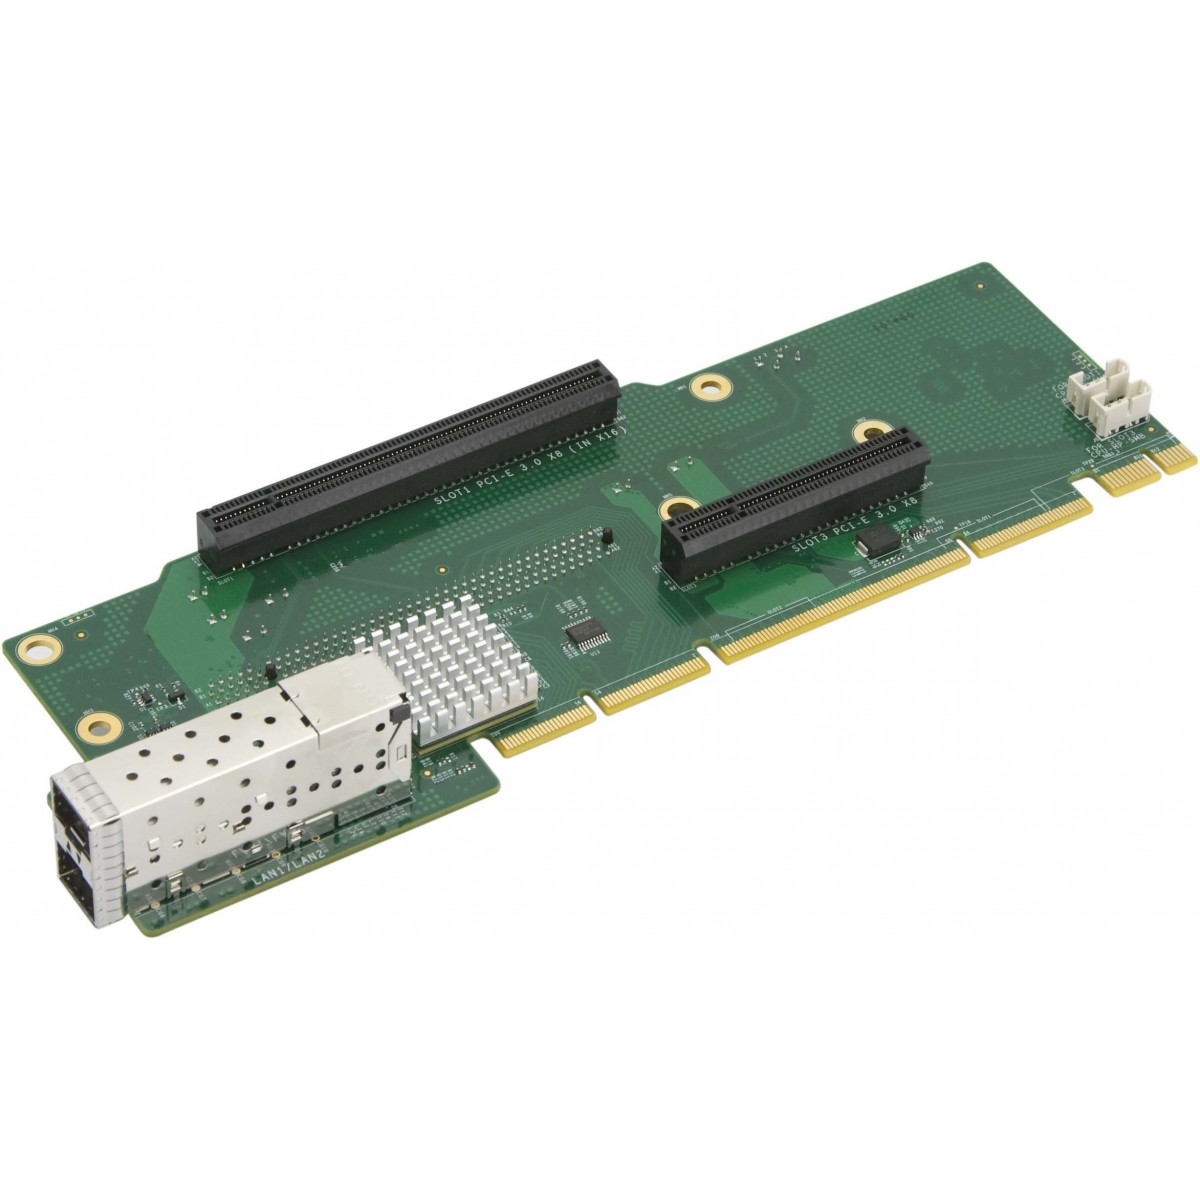 Supermicro AOC-2UR68-I2XS - Internal - Wired - PCI Express - Fiber - 10000 Mbit/s - Green